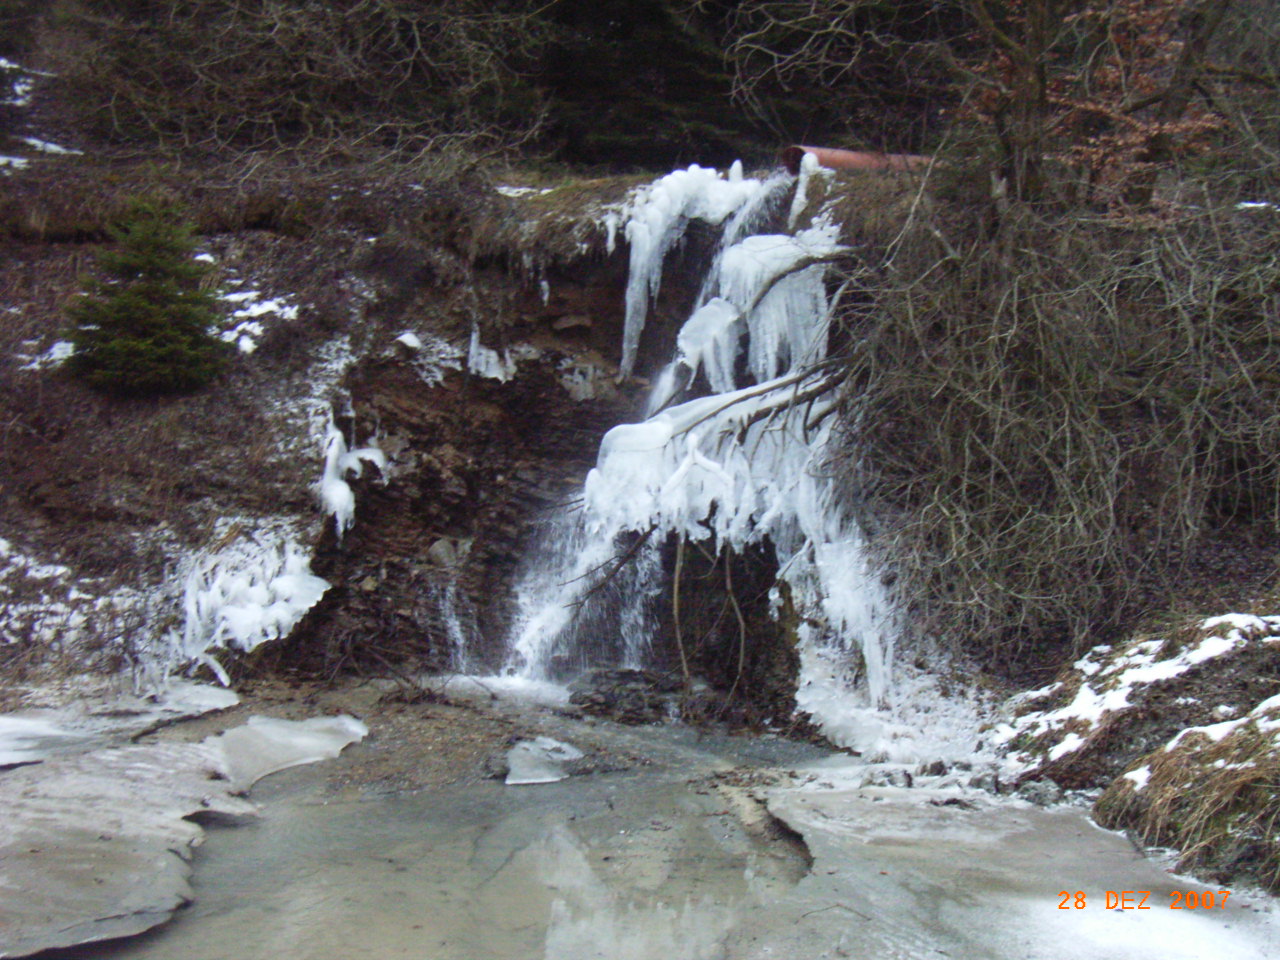 Wasserfall im Winter